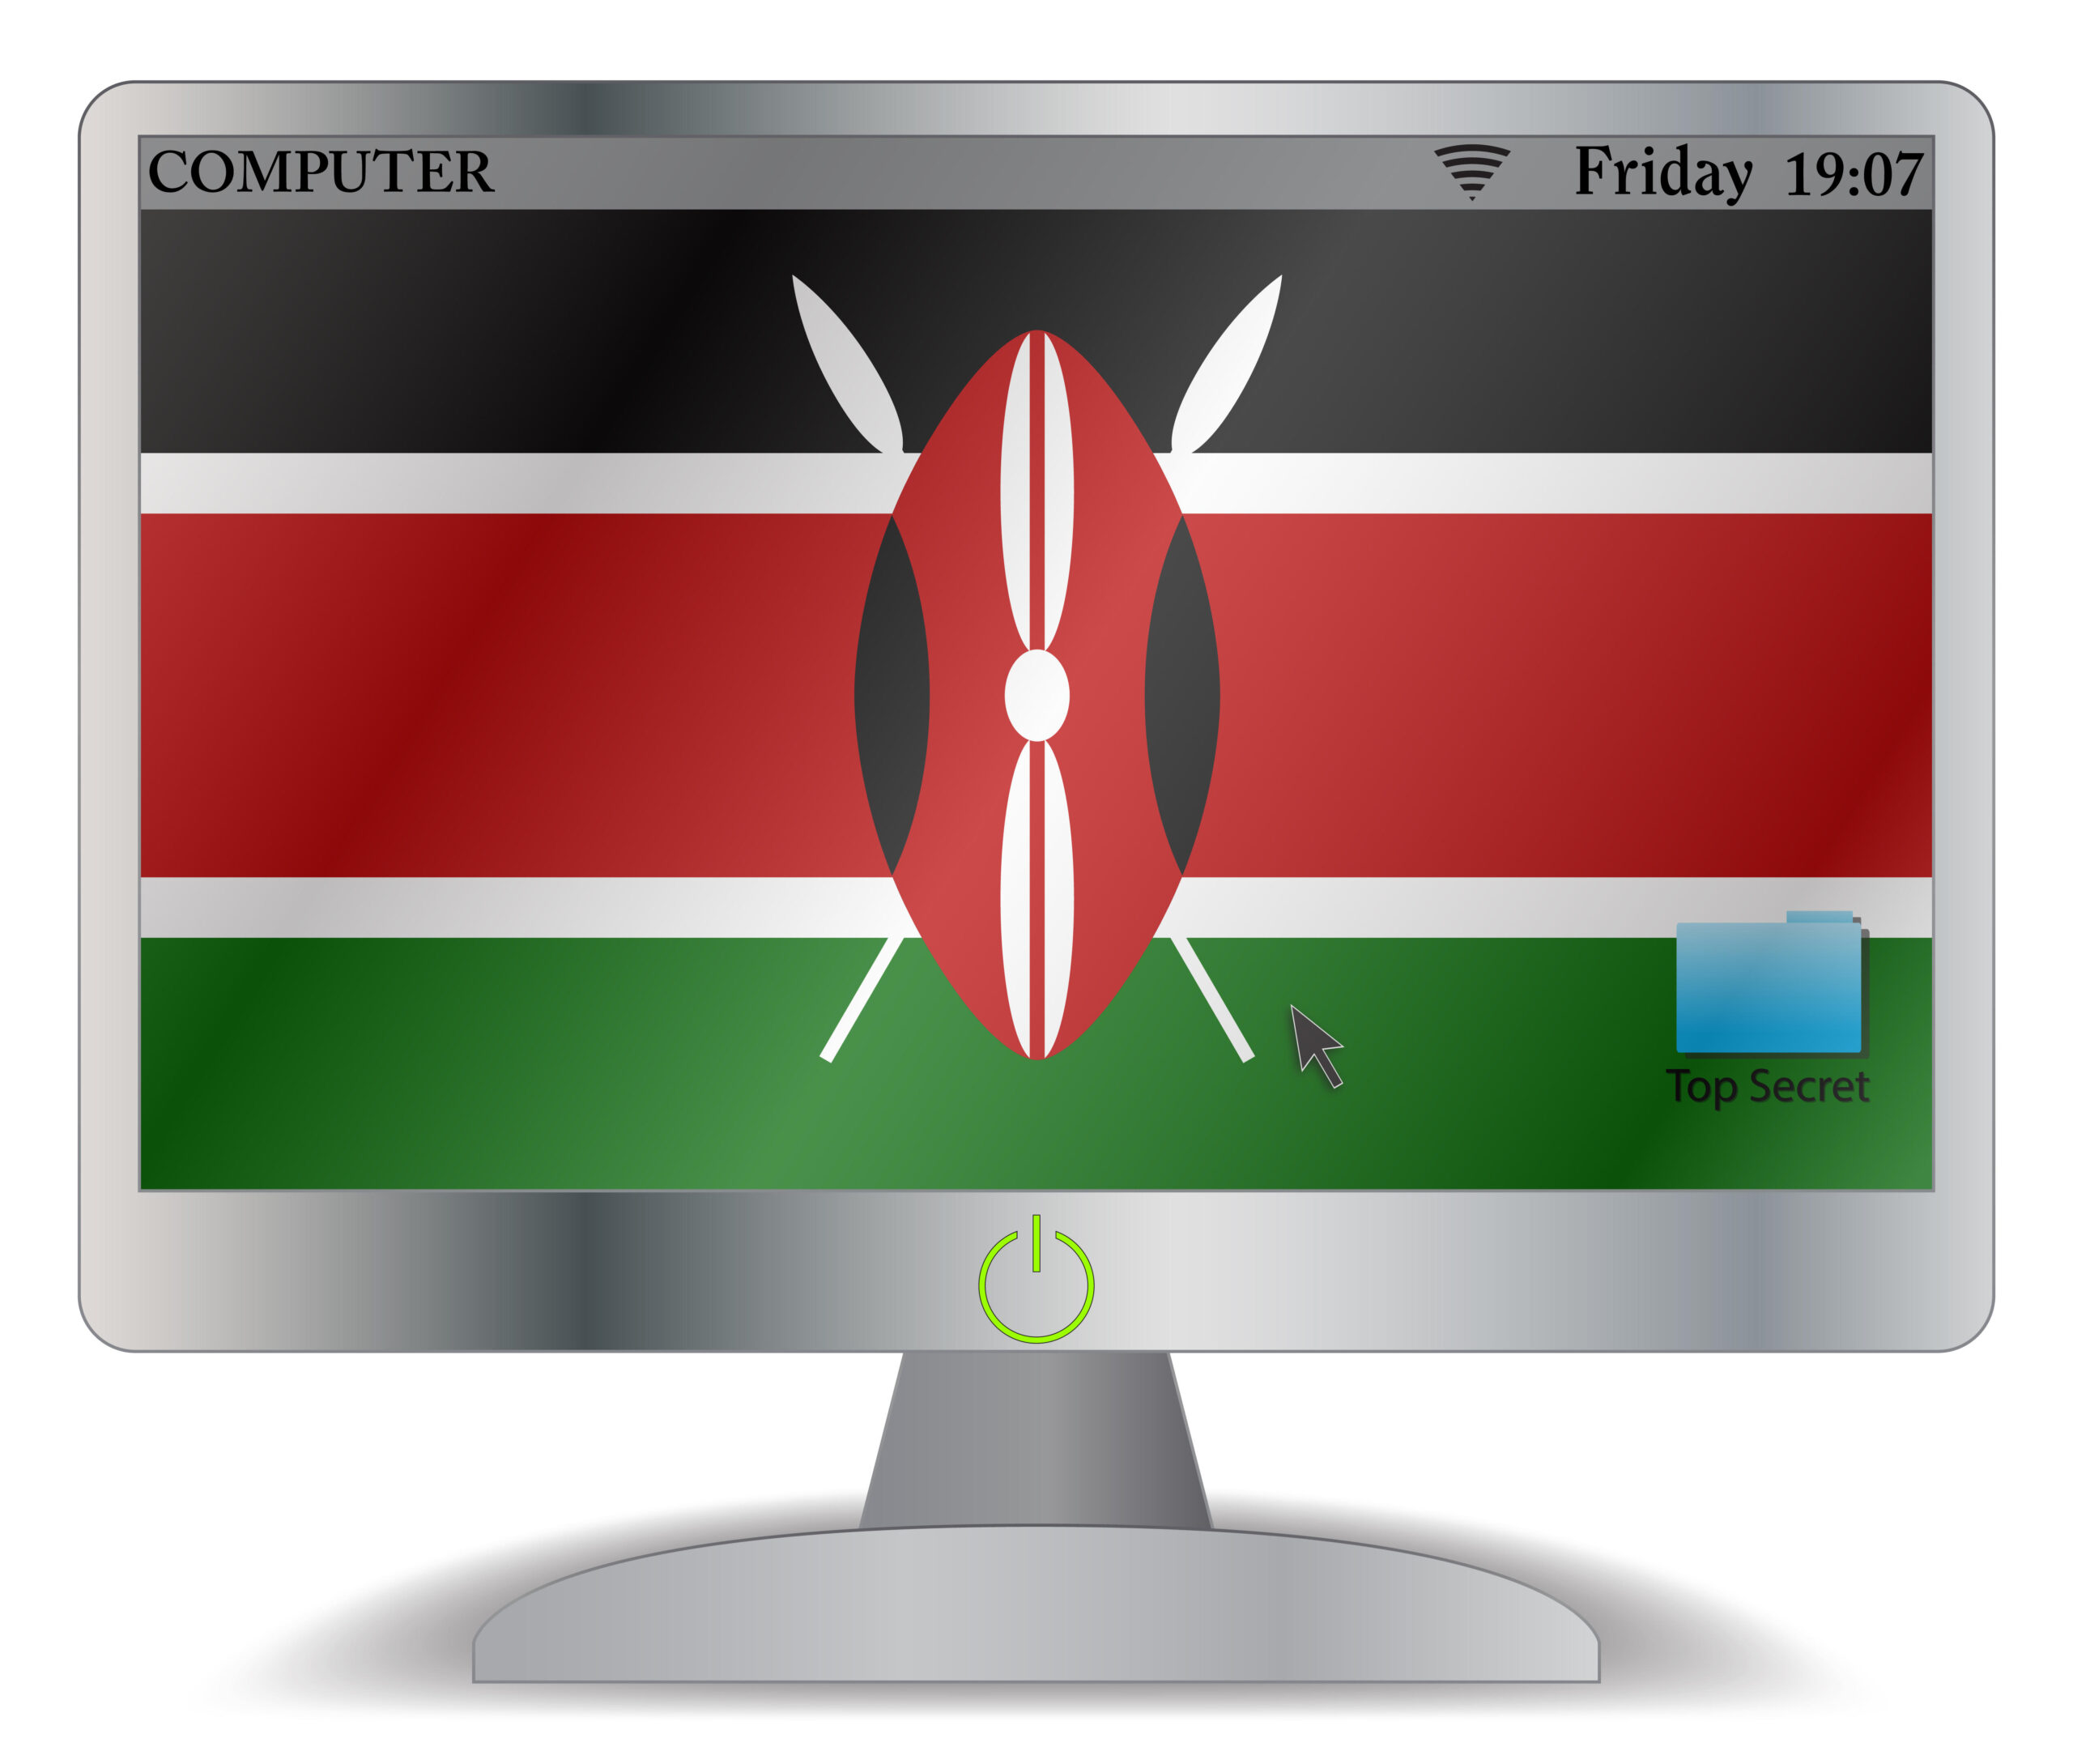 Kenya Initiates Public Sector Digital Skills Training, No Mention of Cybersecurity – Source: www.darkreading.com